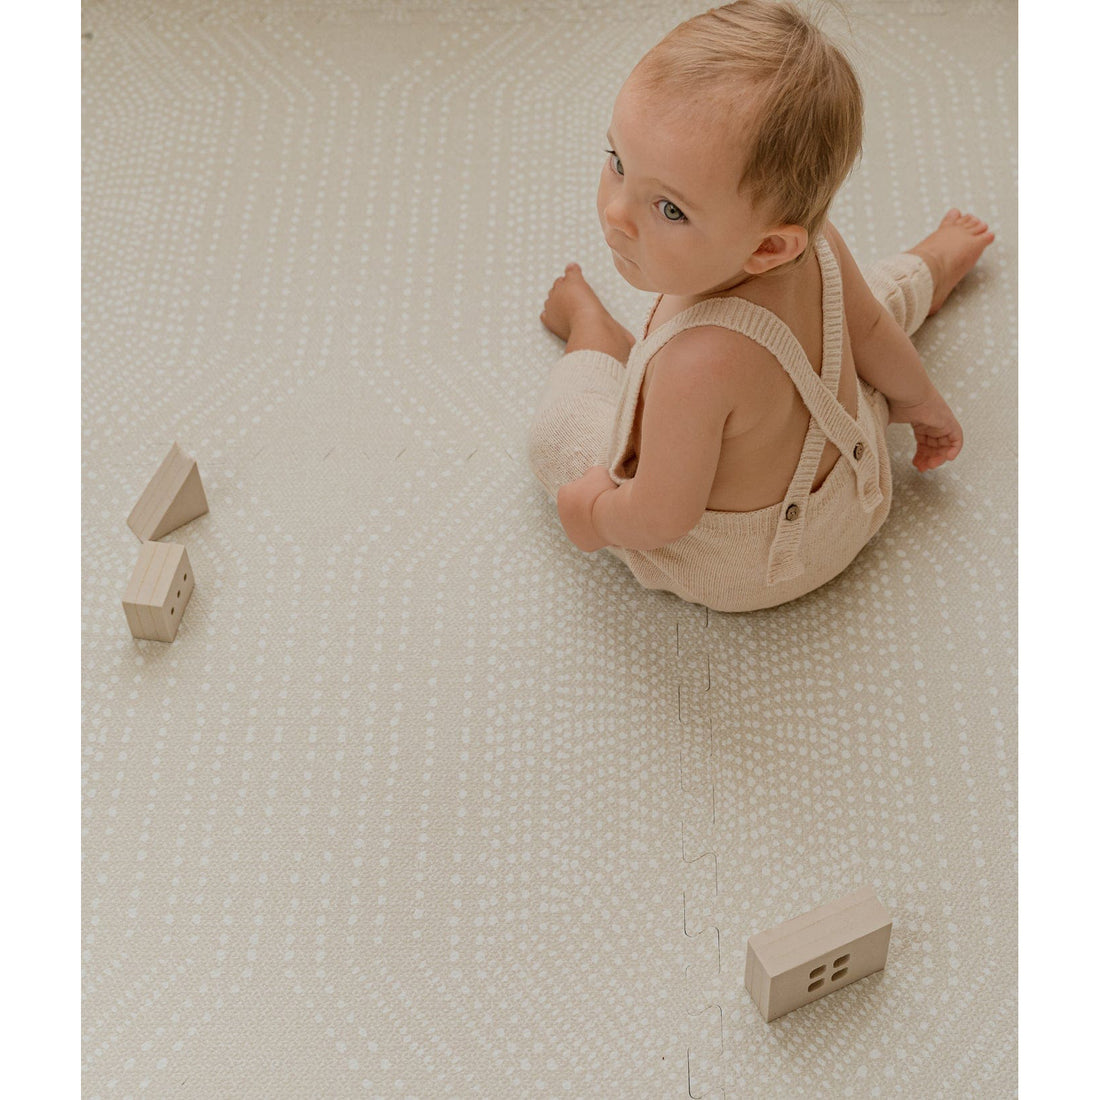 toddlekind-prettier-puzzle-playmat-deco-ecru-120x180cm-6-tiles-&-12-edging-borders-todk-337962